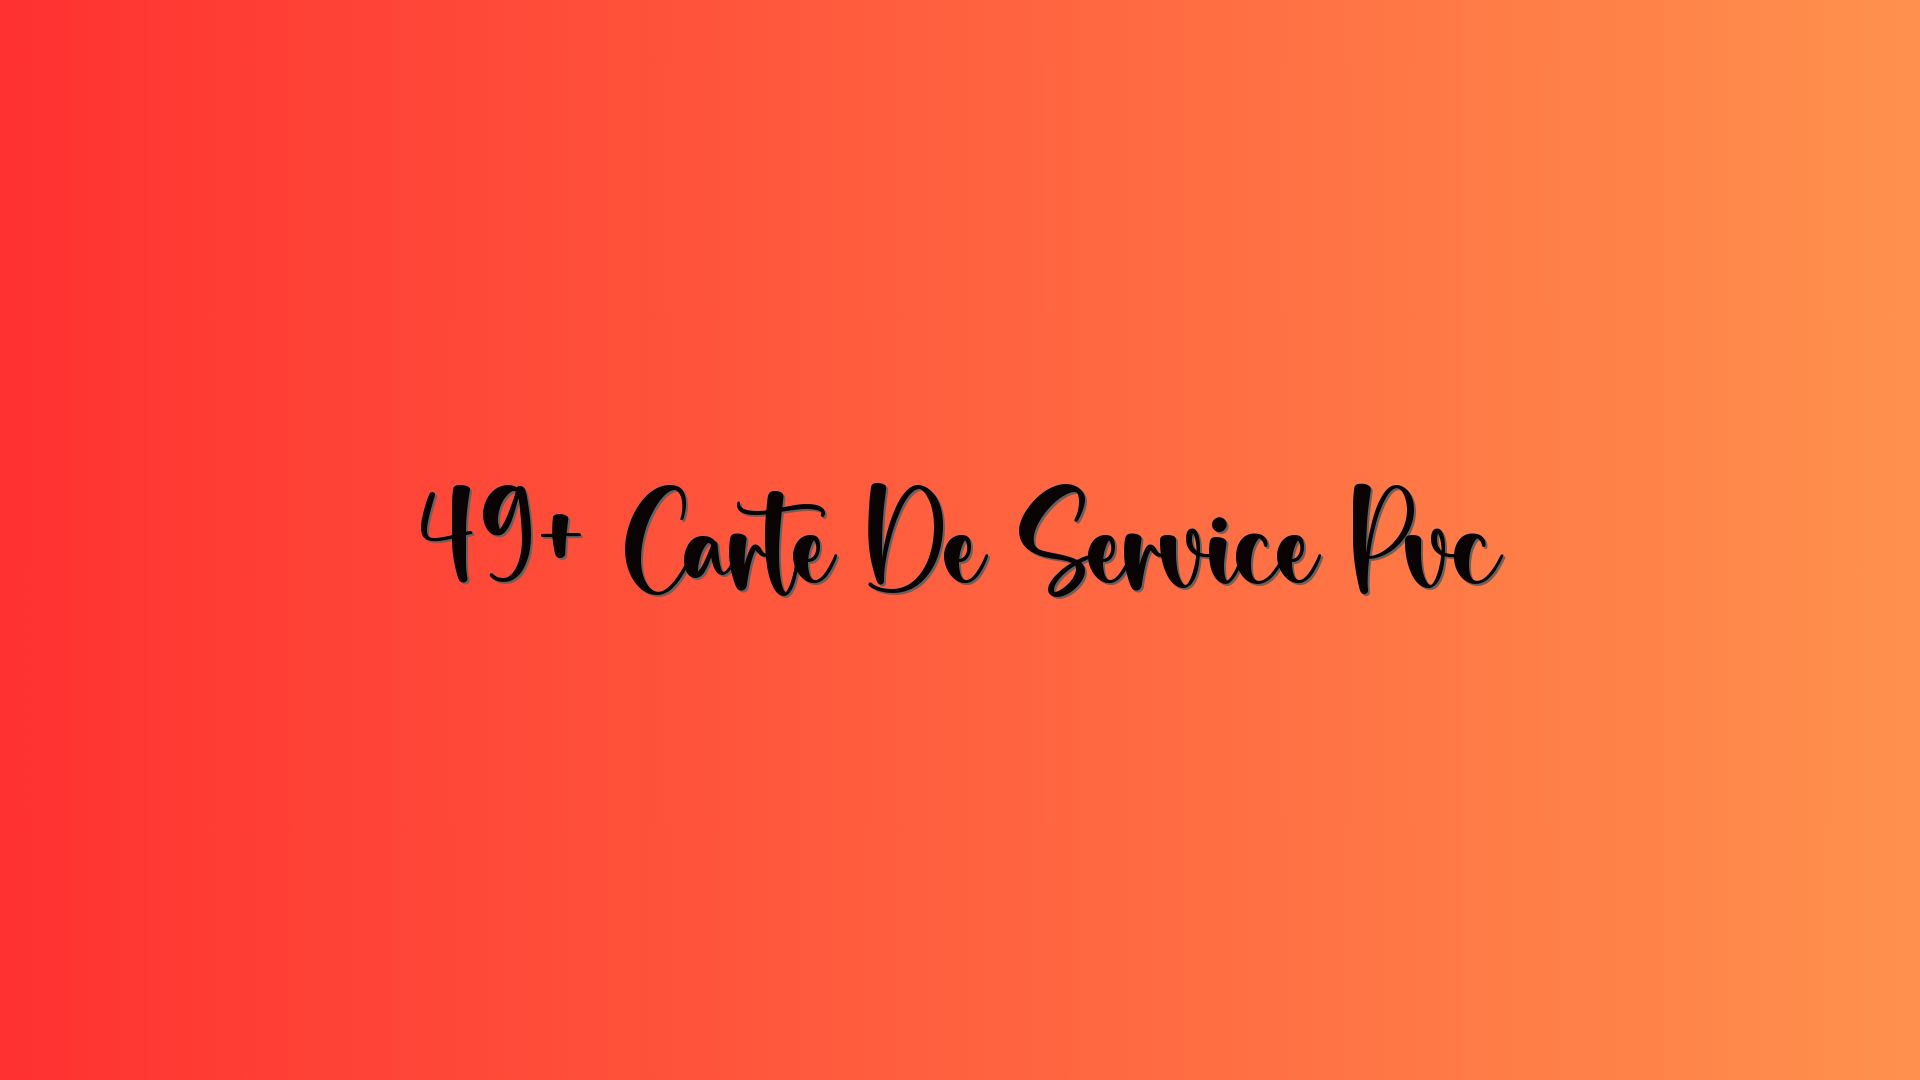 49+ Carte De Service Pvc